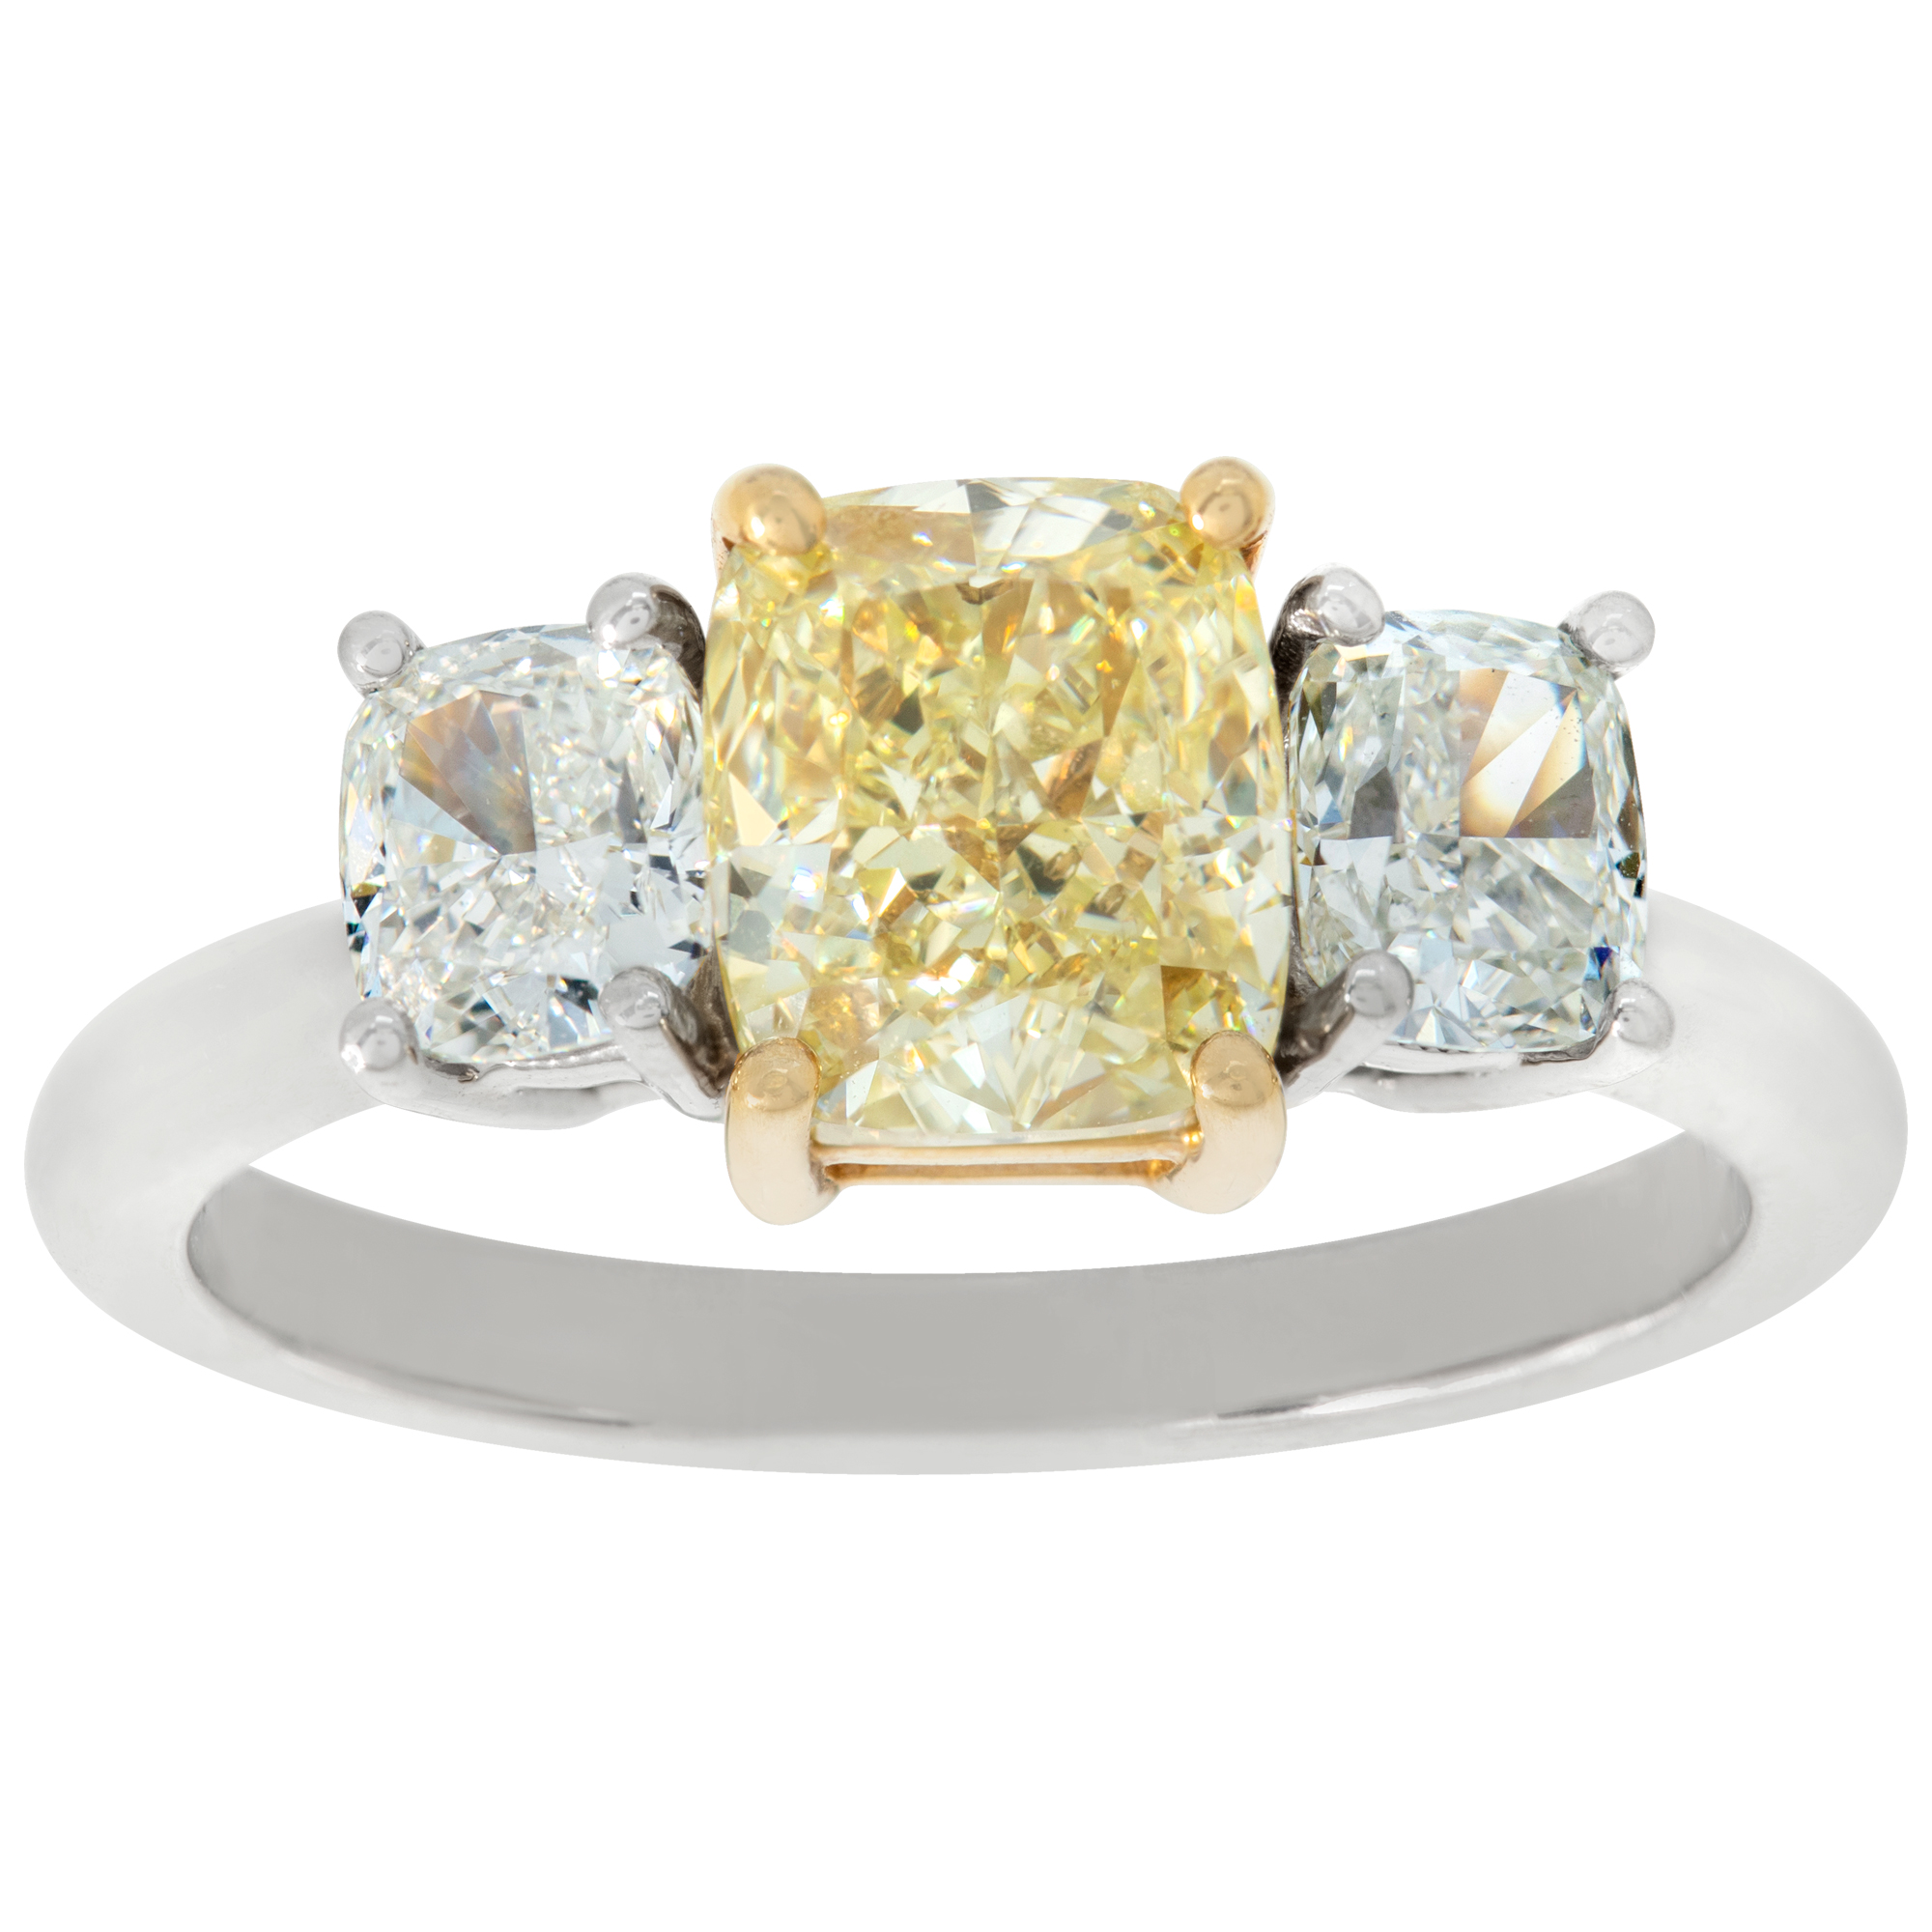 GIA certified fancy yellow diamond ring in platinum